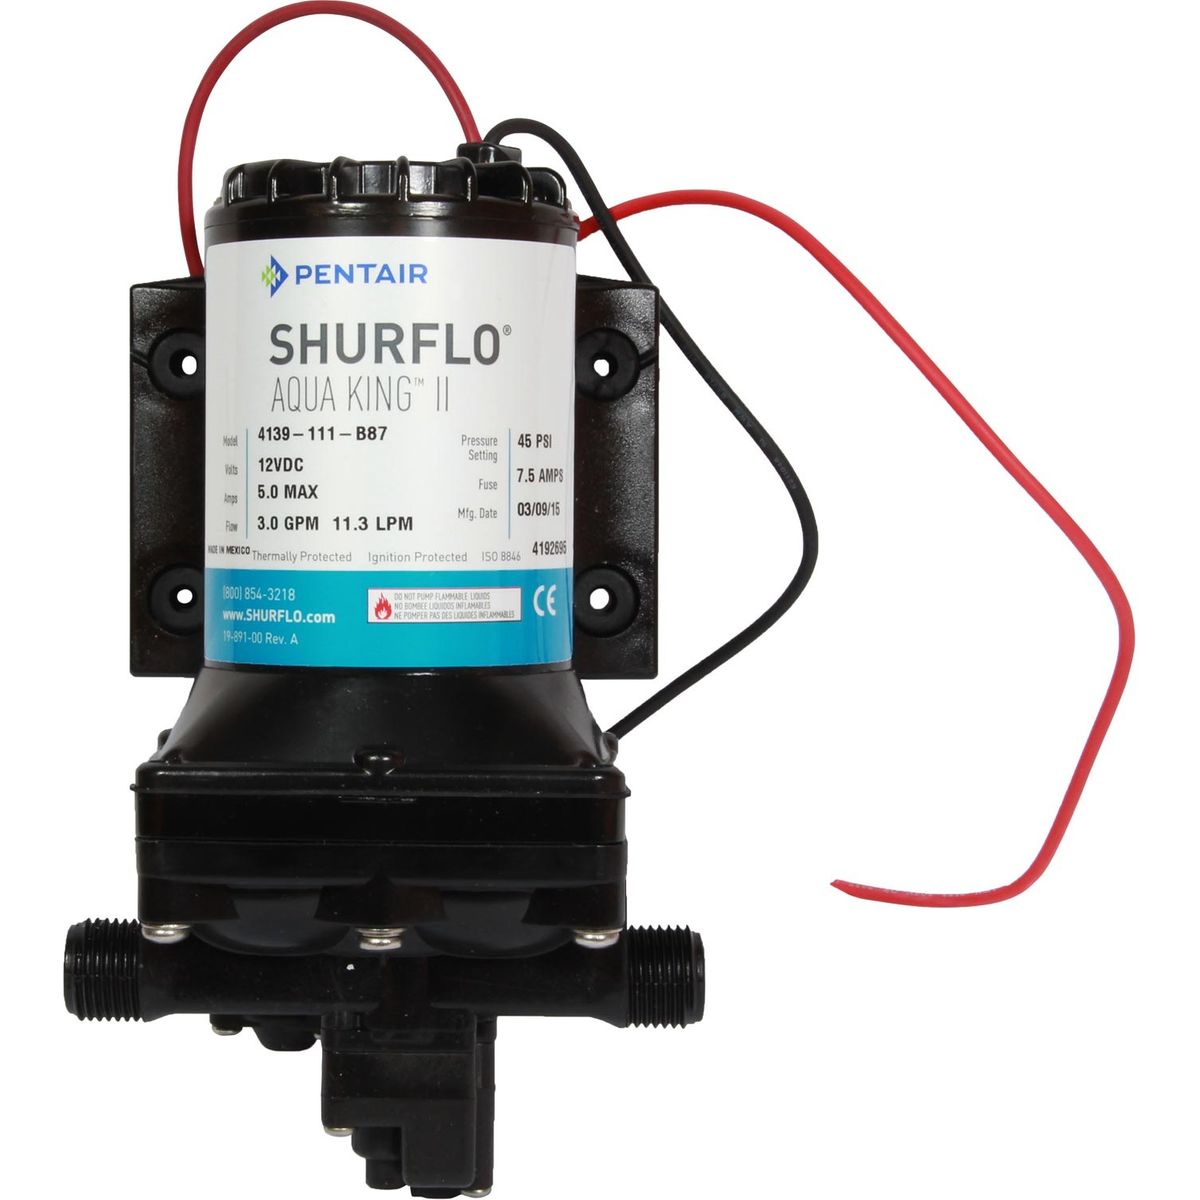 Aqua King™ II Water Pump 3.0 GPM